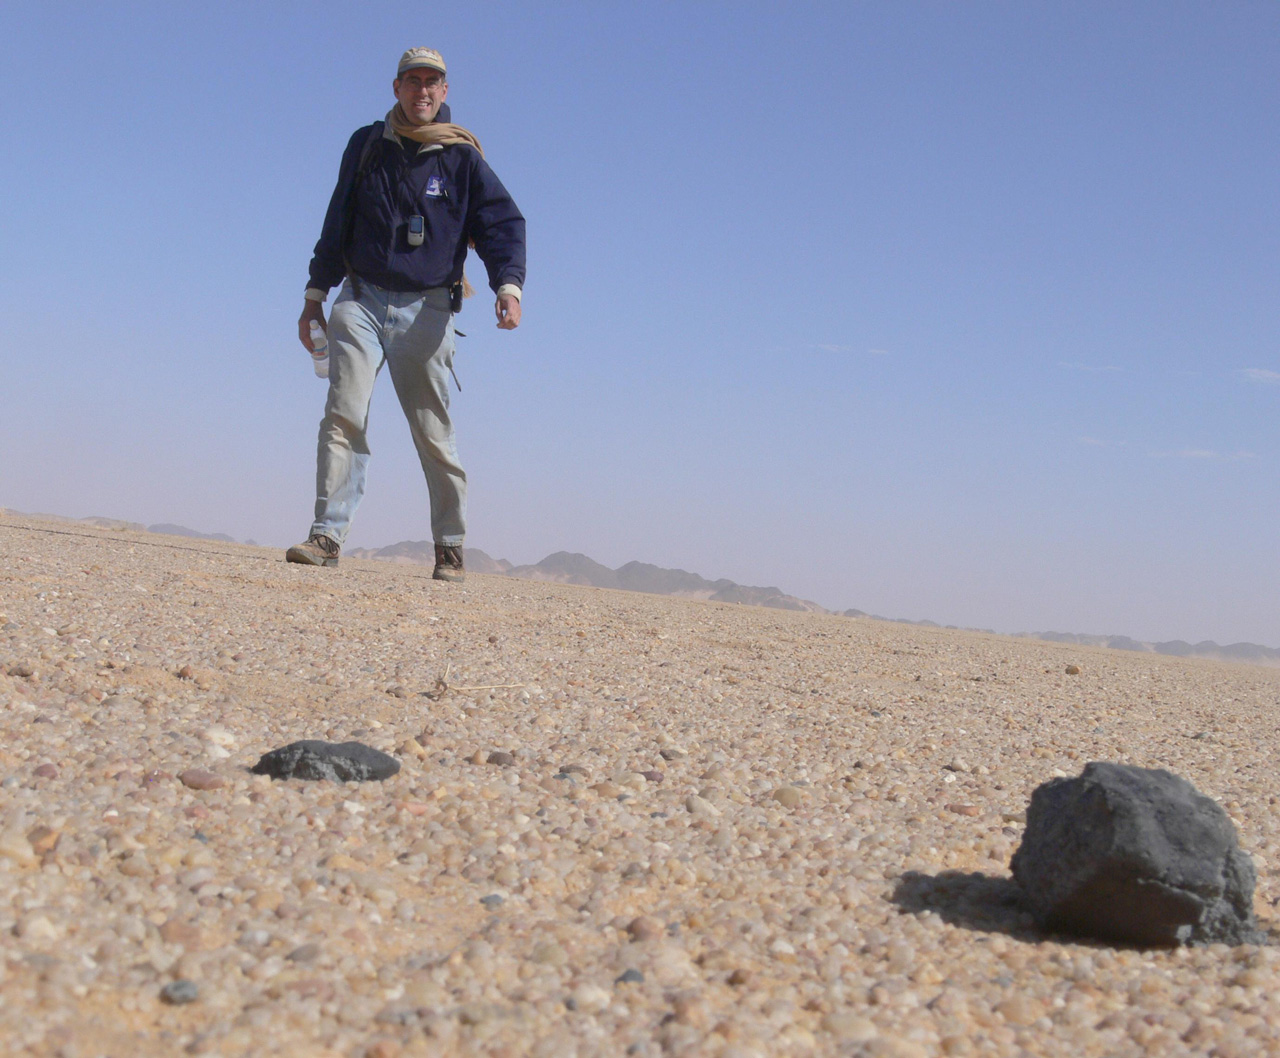 Man standing over small meteorite in desert sand.